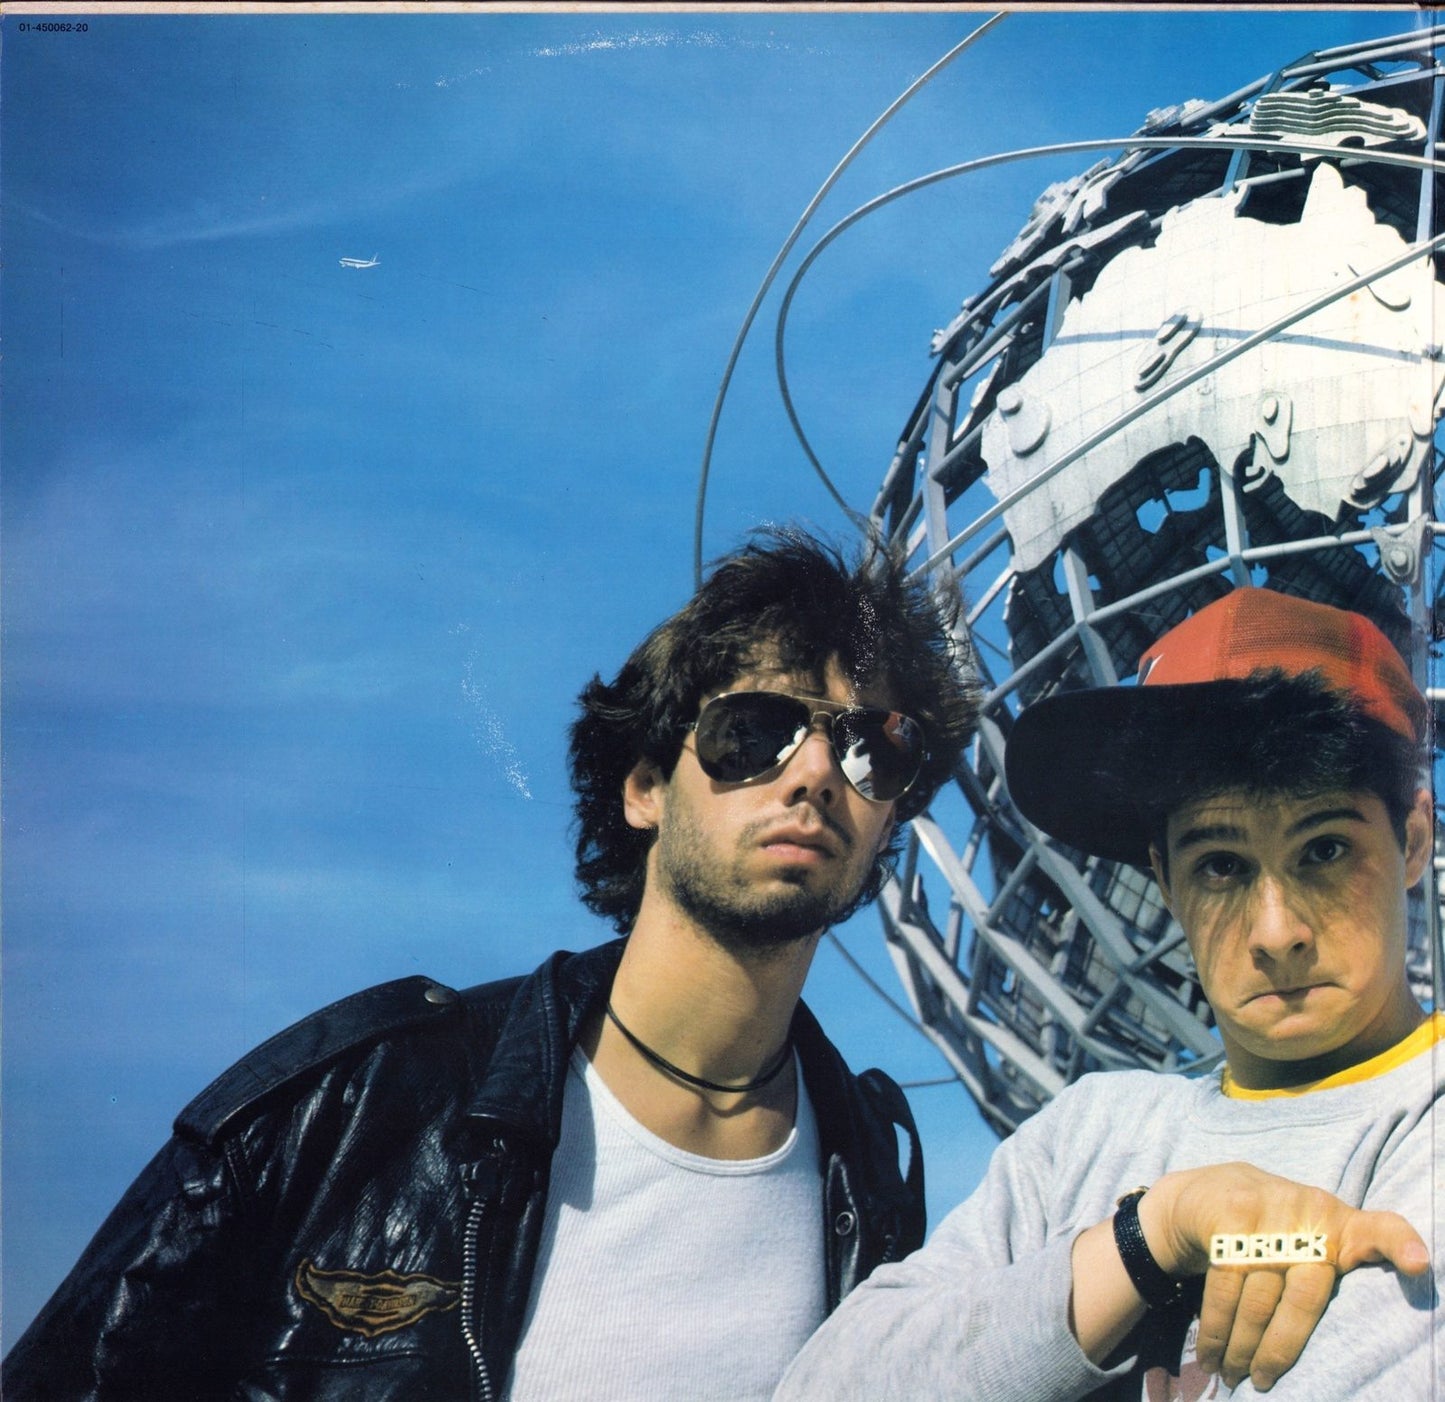 Beastie Boys - Licensed To Ill Vinyl LP